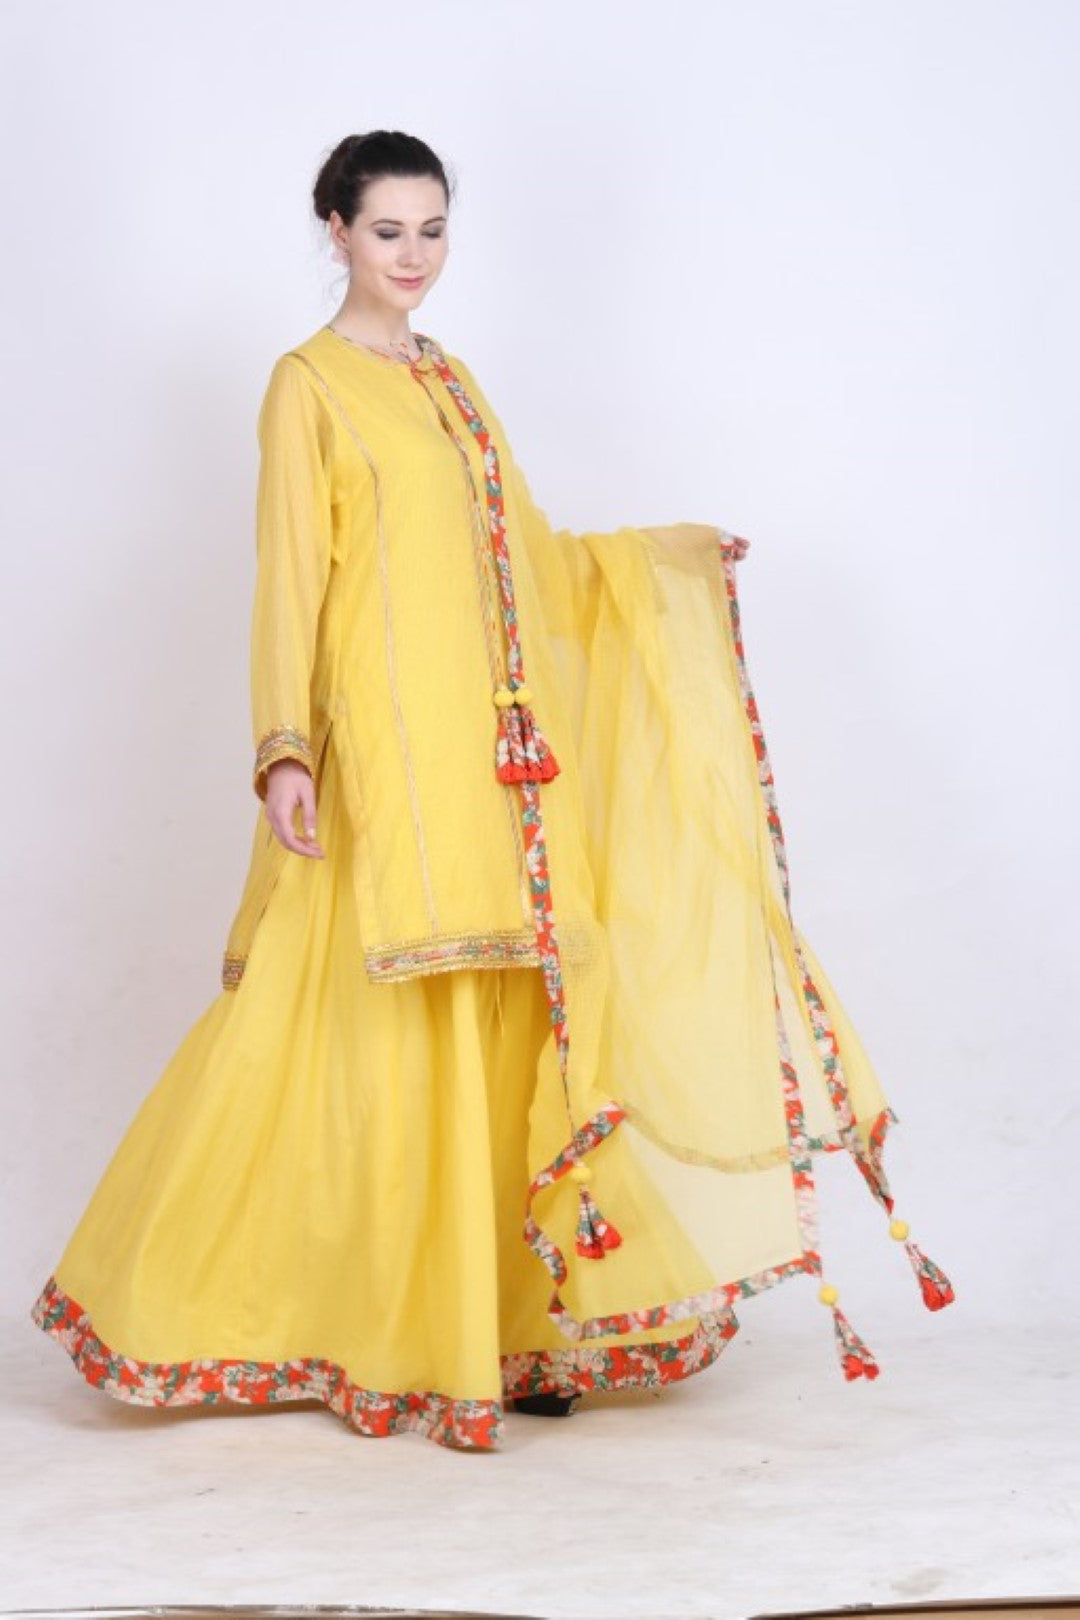 Pitambari yellow kota doria kurta with cotton silk skirt and kota doria dupatta.